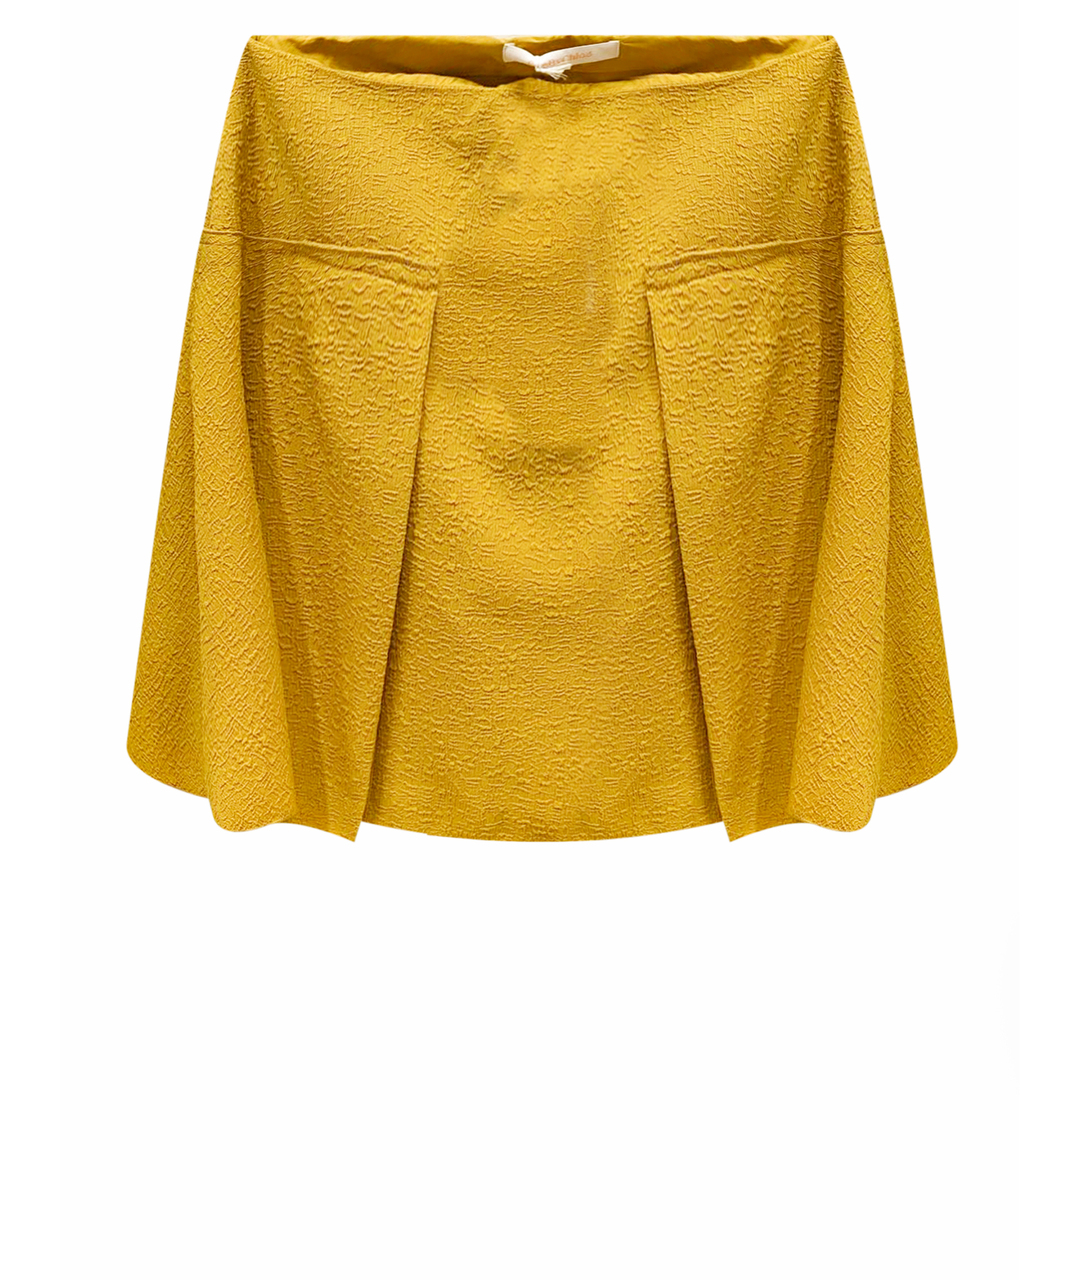 SEE BY CHLOE Желтая полиэстеровая юбка мини, фото 1